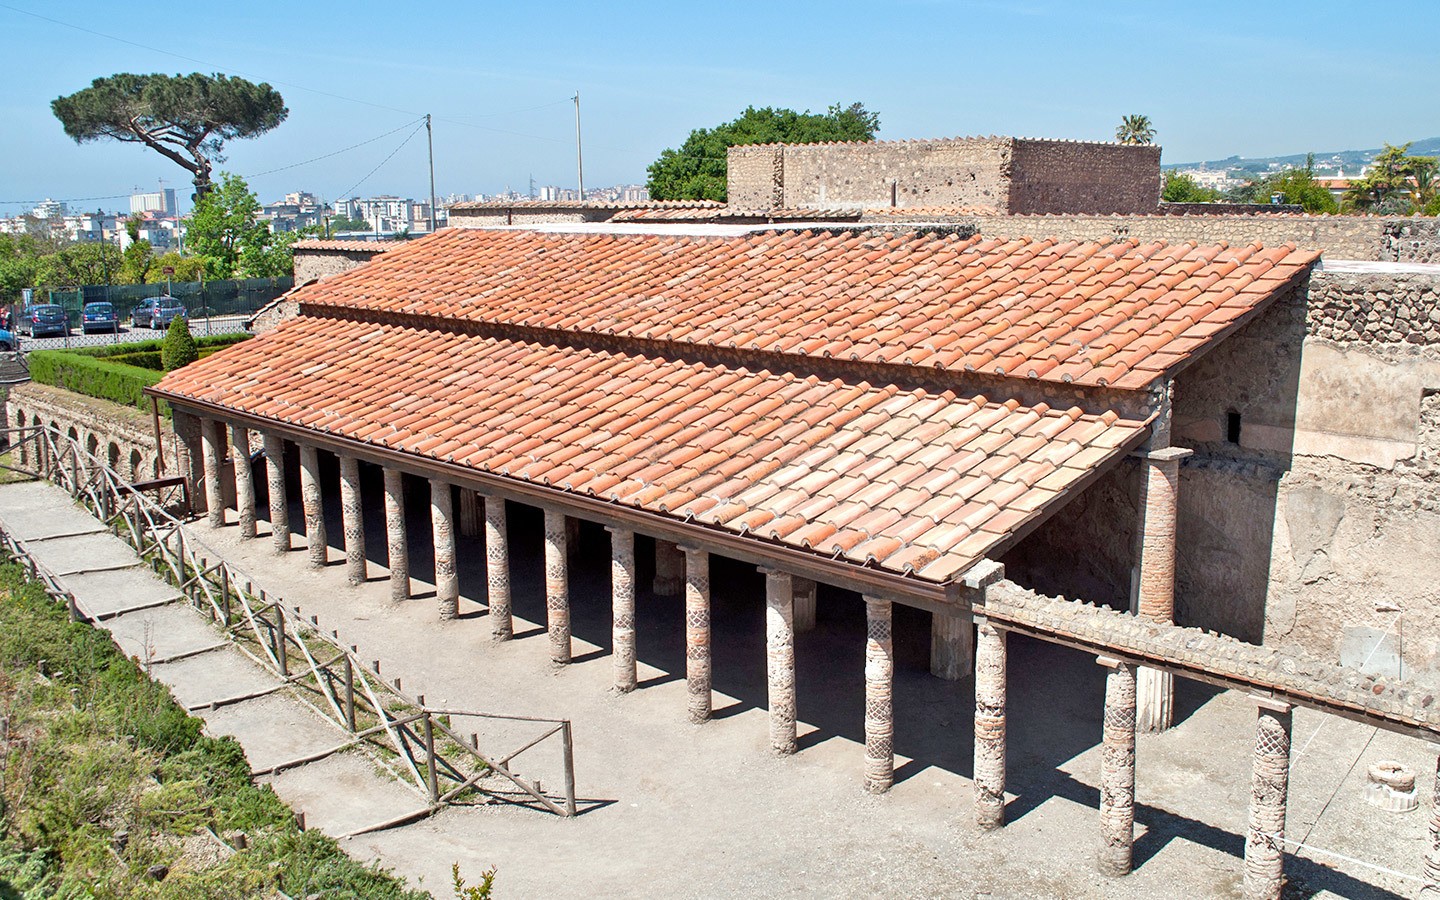 The Villa dei Misteri in Pompeii